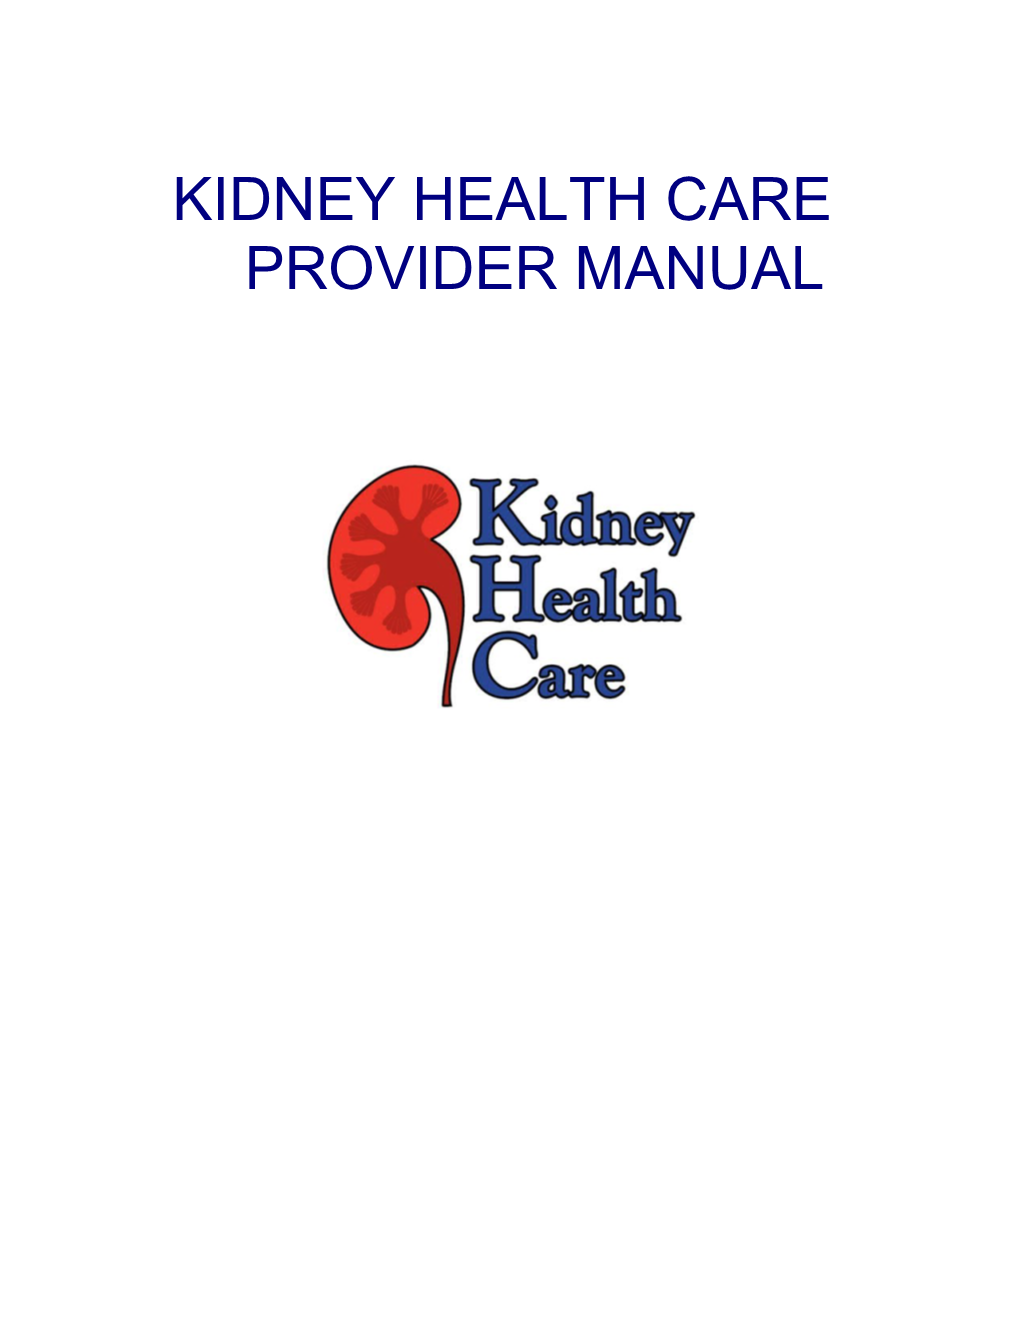 KHC Provider Manual (Word)